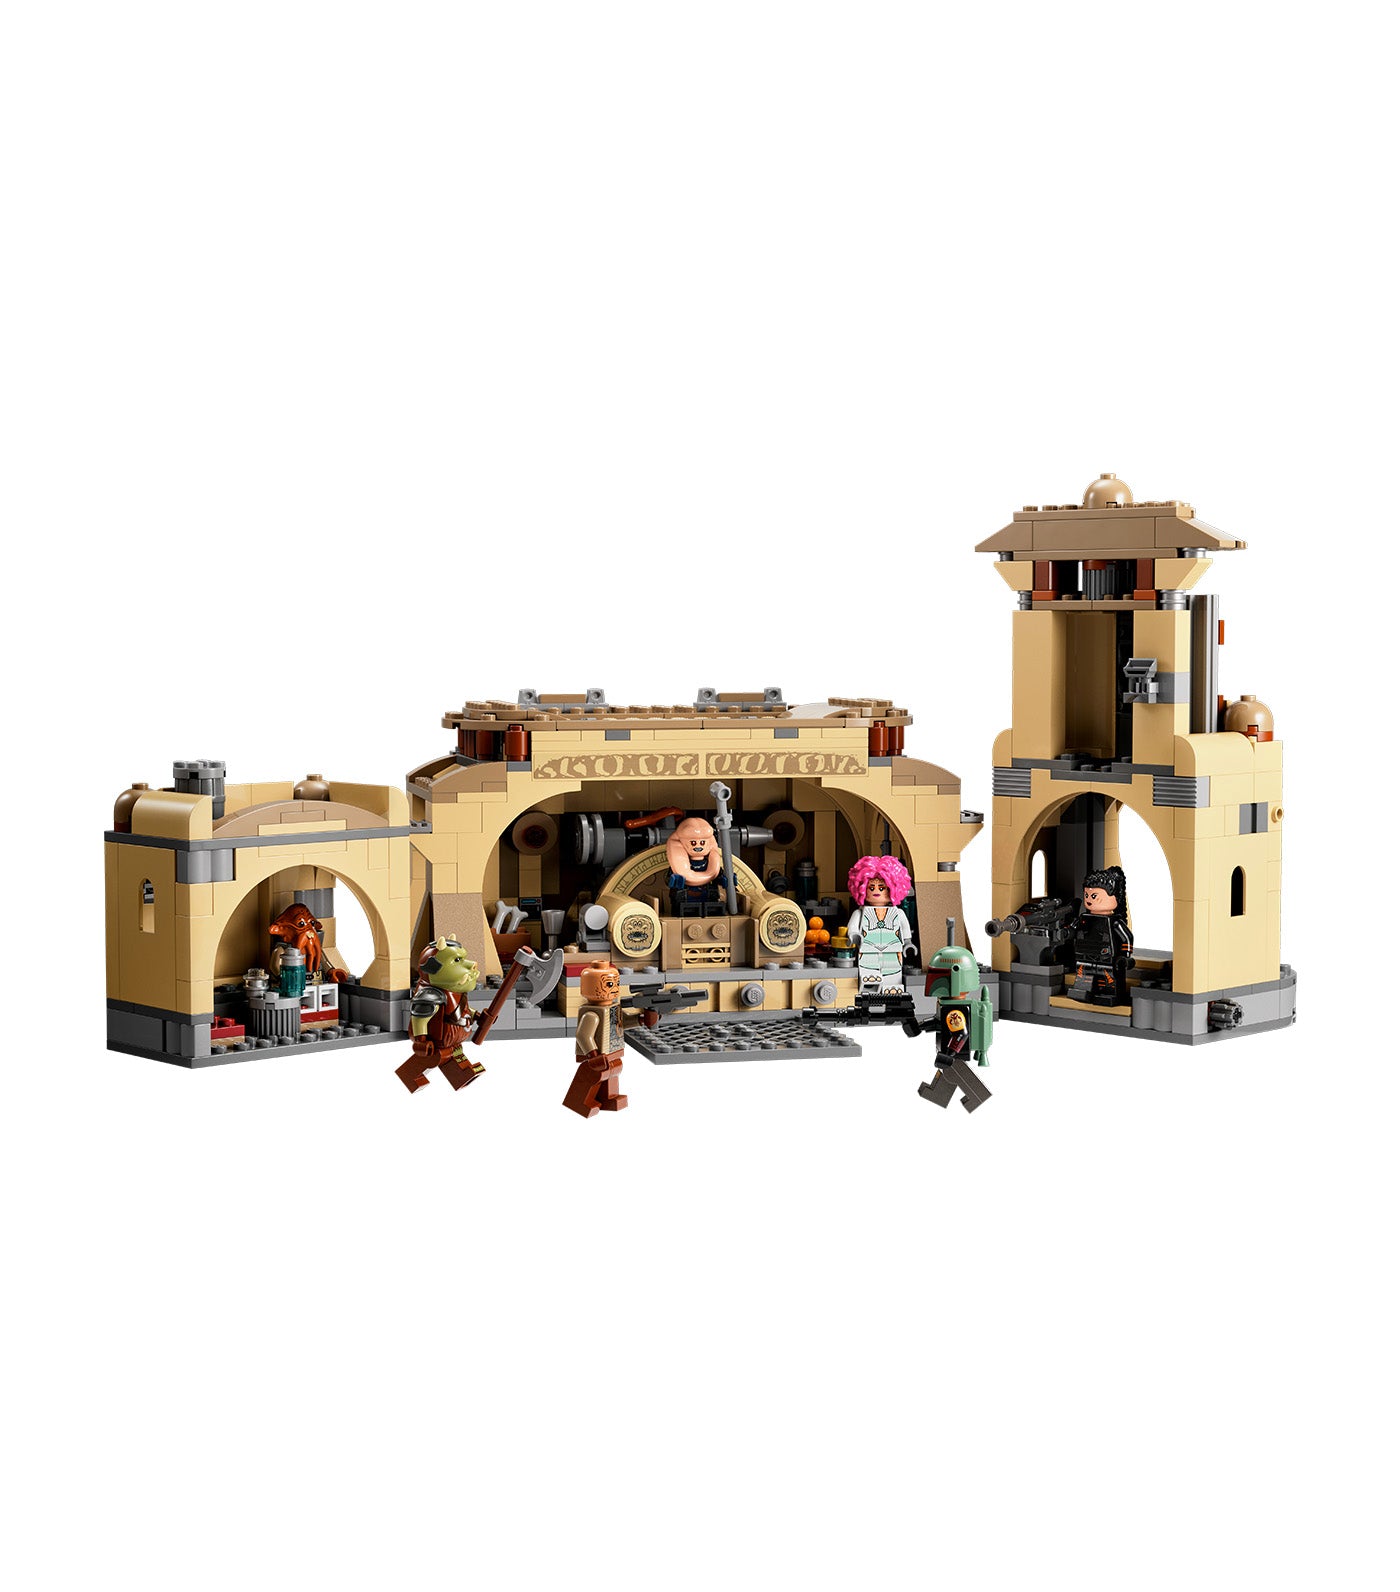 LEGO® Star Wars™ Boba Fett's Throne Room